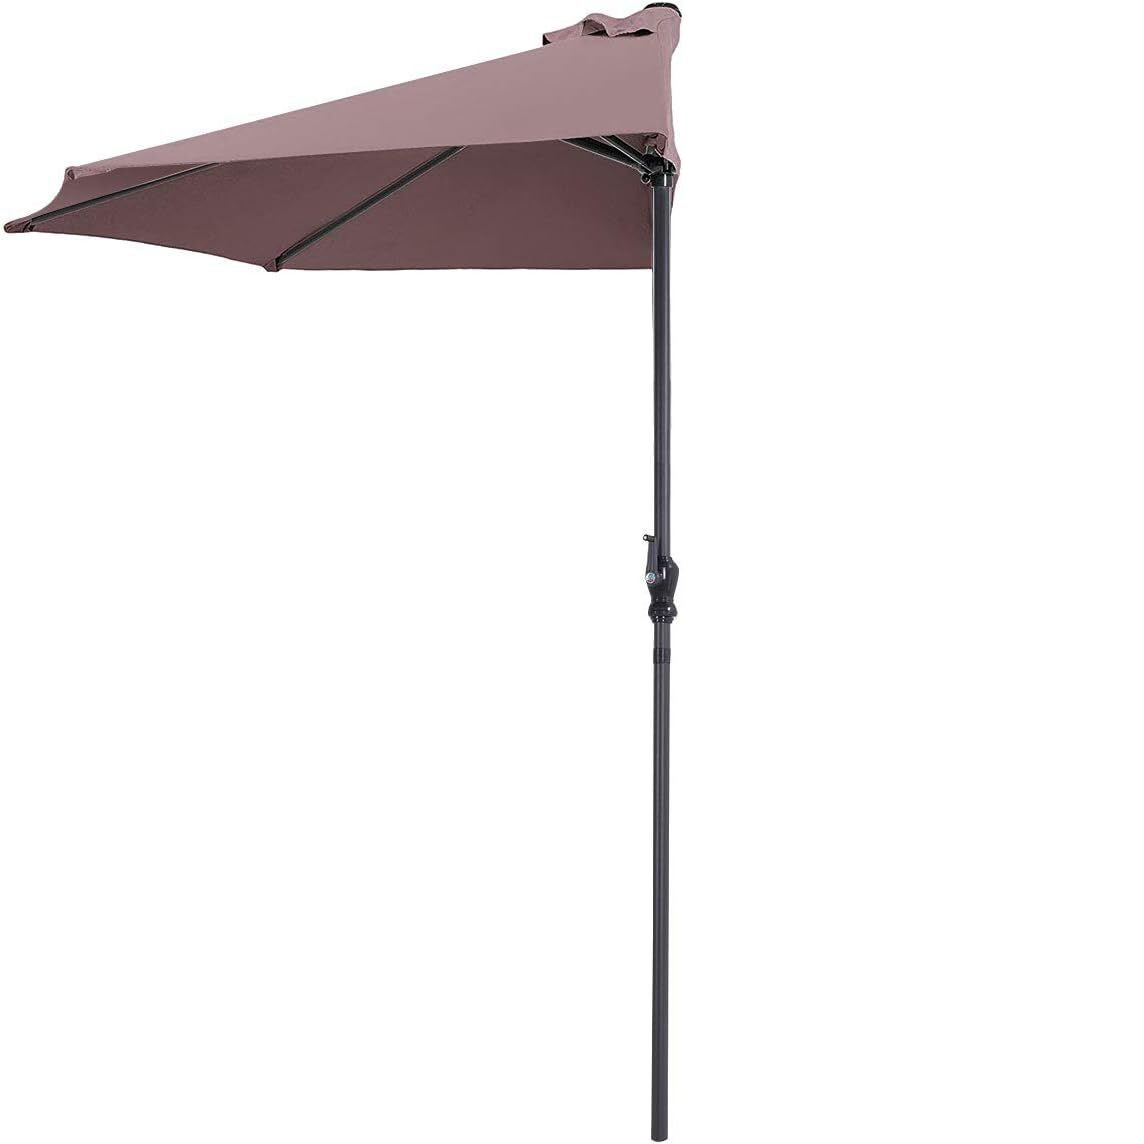 Tangkula 9 ft Half Round Outdoor Patio Umbrella in tan